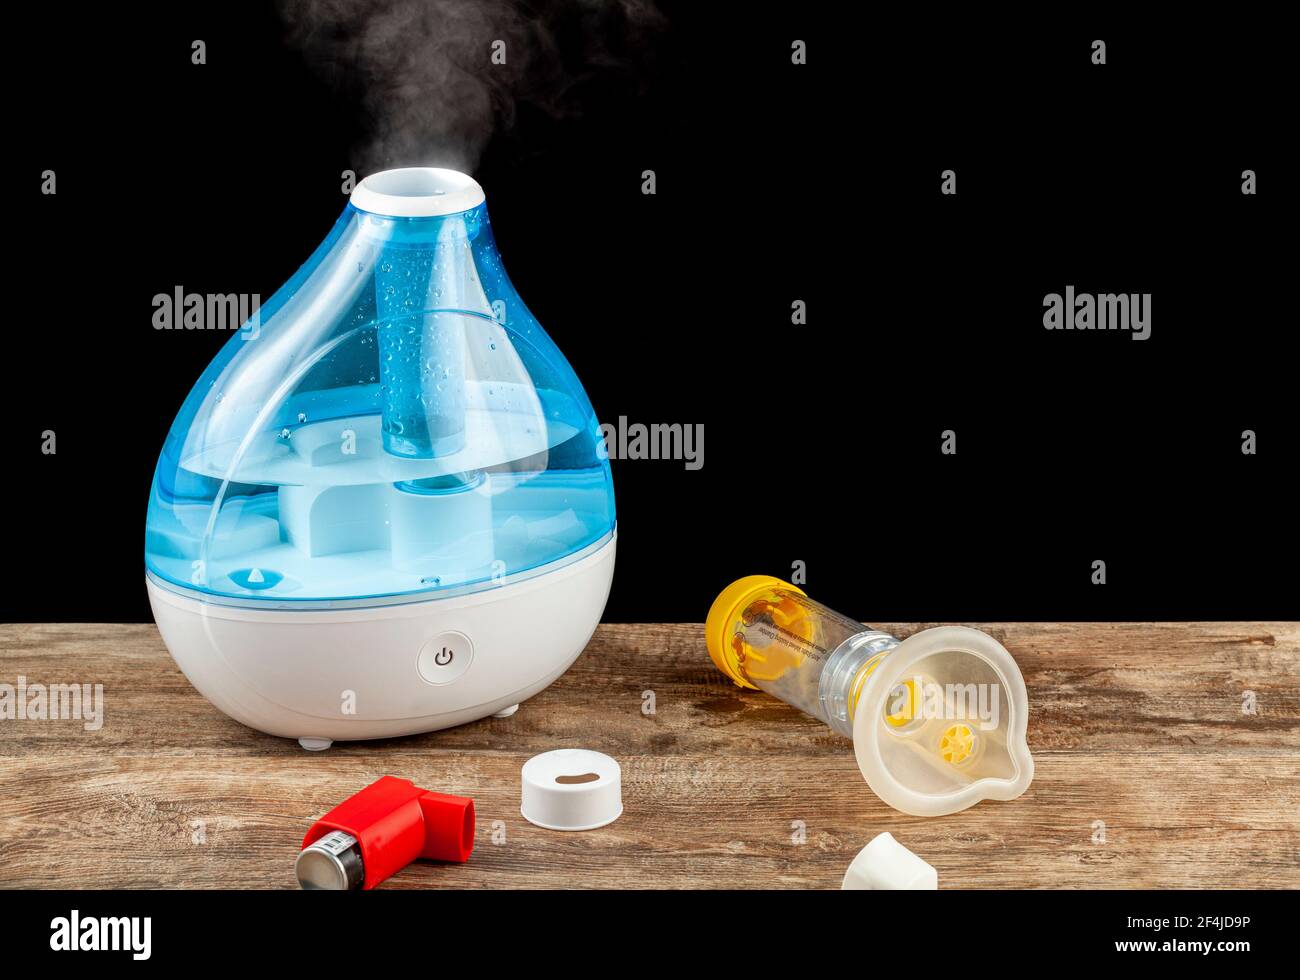 Inhalador de vapor fotografías e imágenes de alta resolución - Alamy